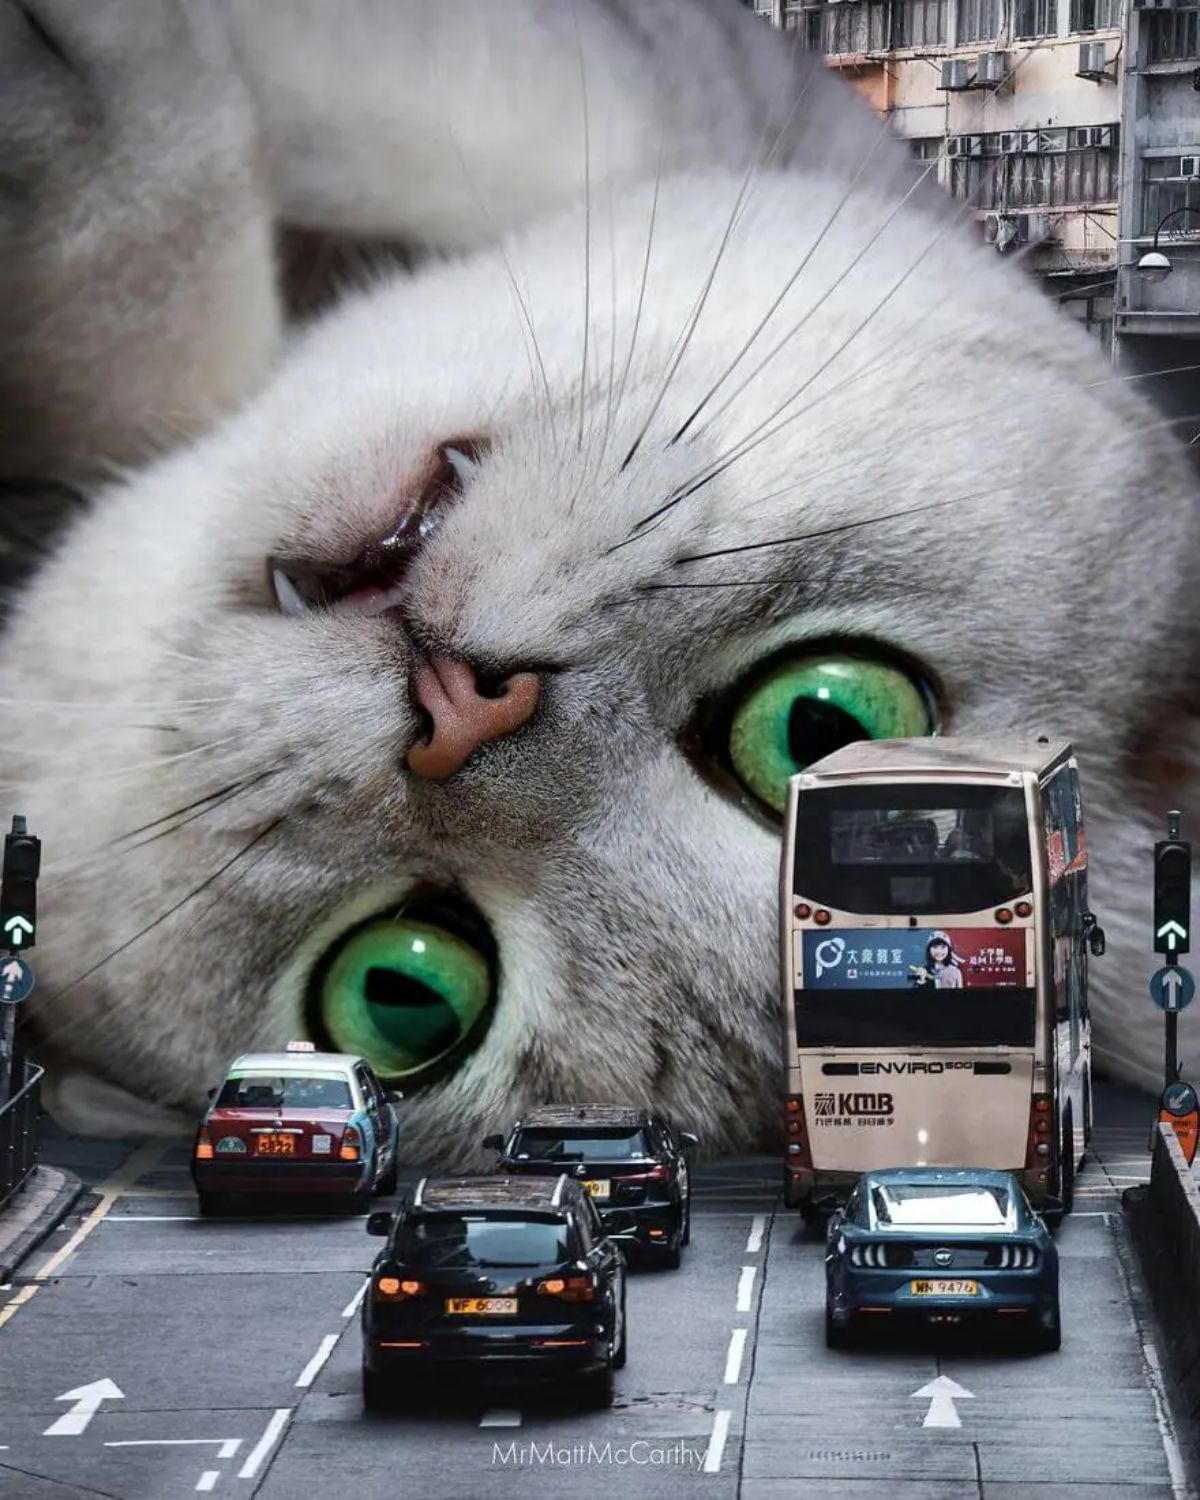 large photoshopped grey cat's head blocking the vehicles on the road